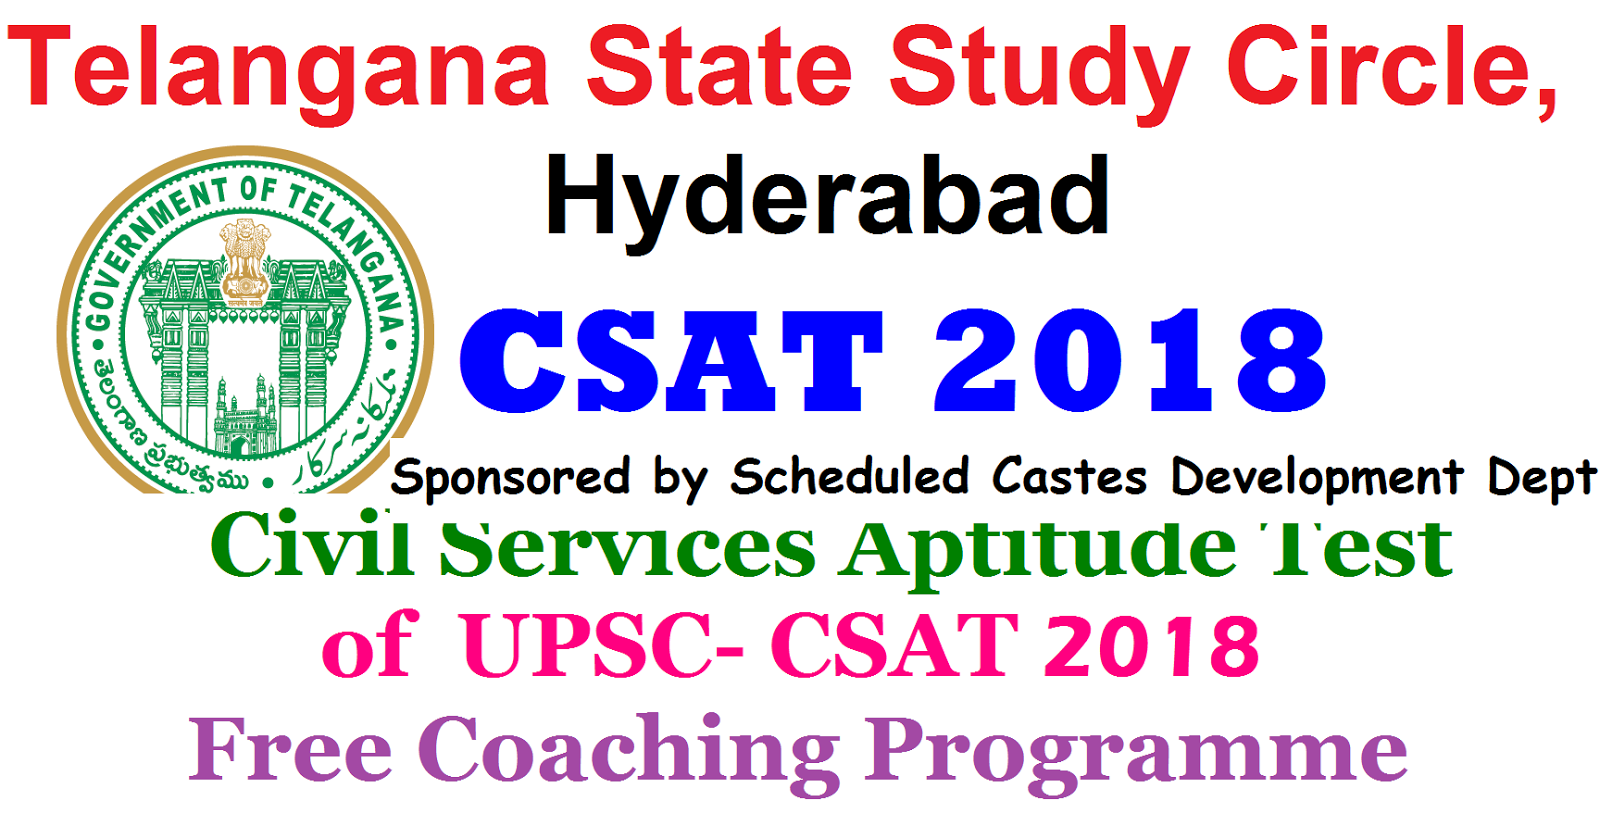 csat-2018-civil-services-aptitude-test-of-upsc-free-coaching-programme-at-t-s-study-circle